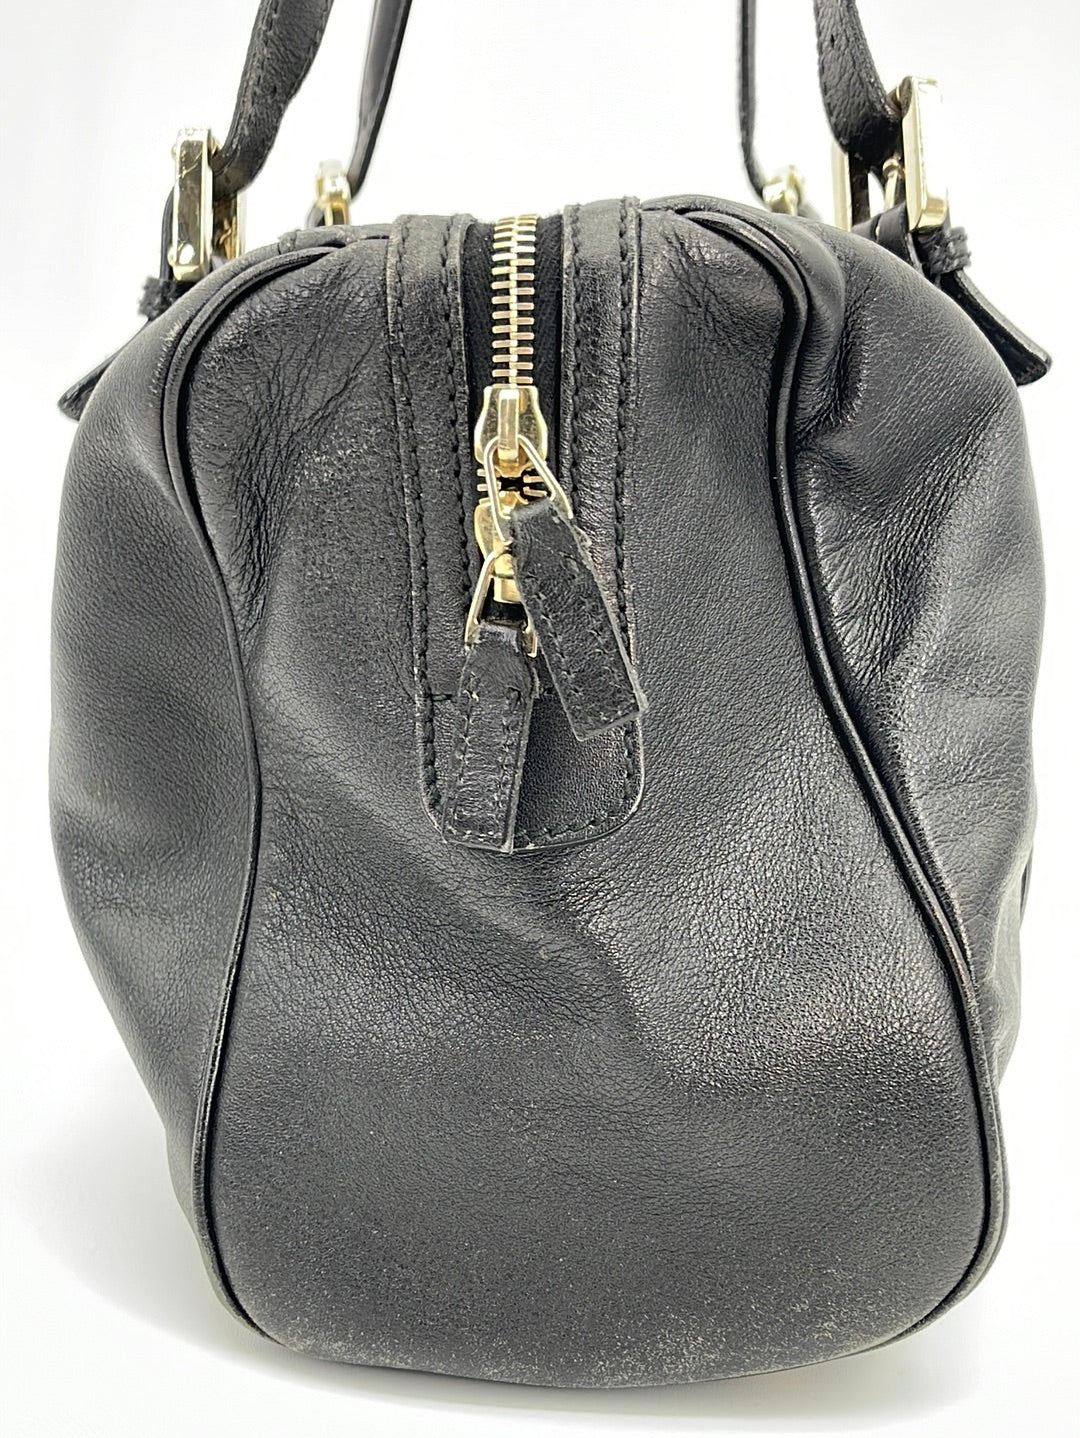 Britt leather handbag Gucci Black in Leather - 25925449